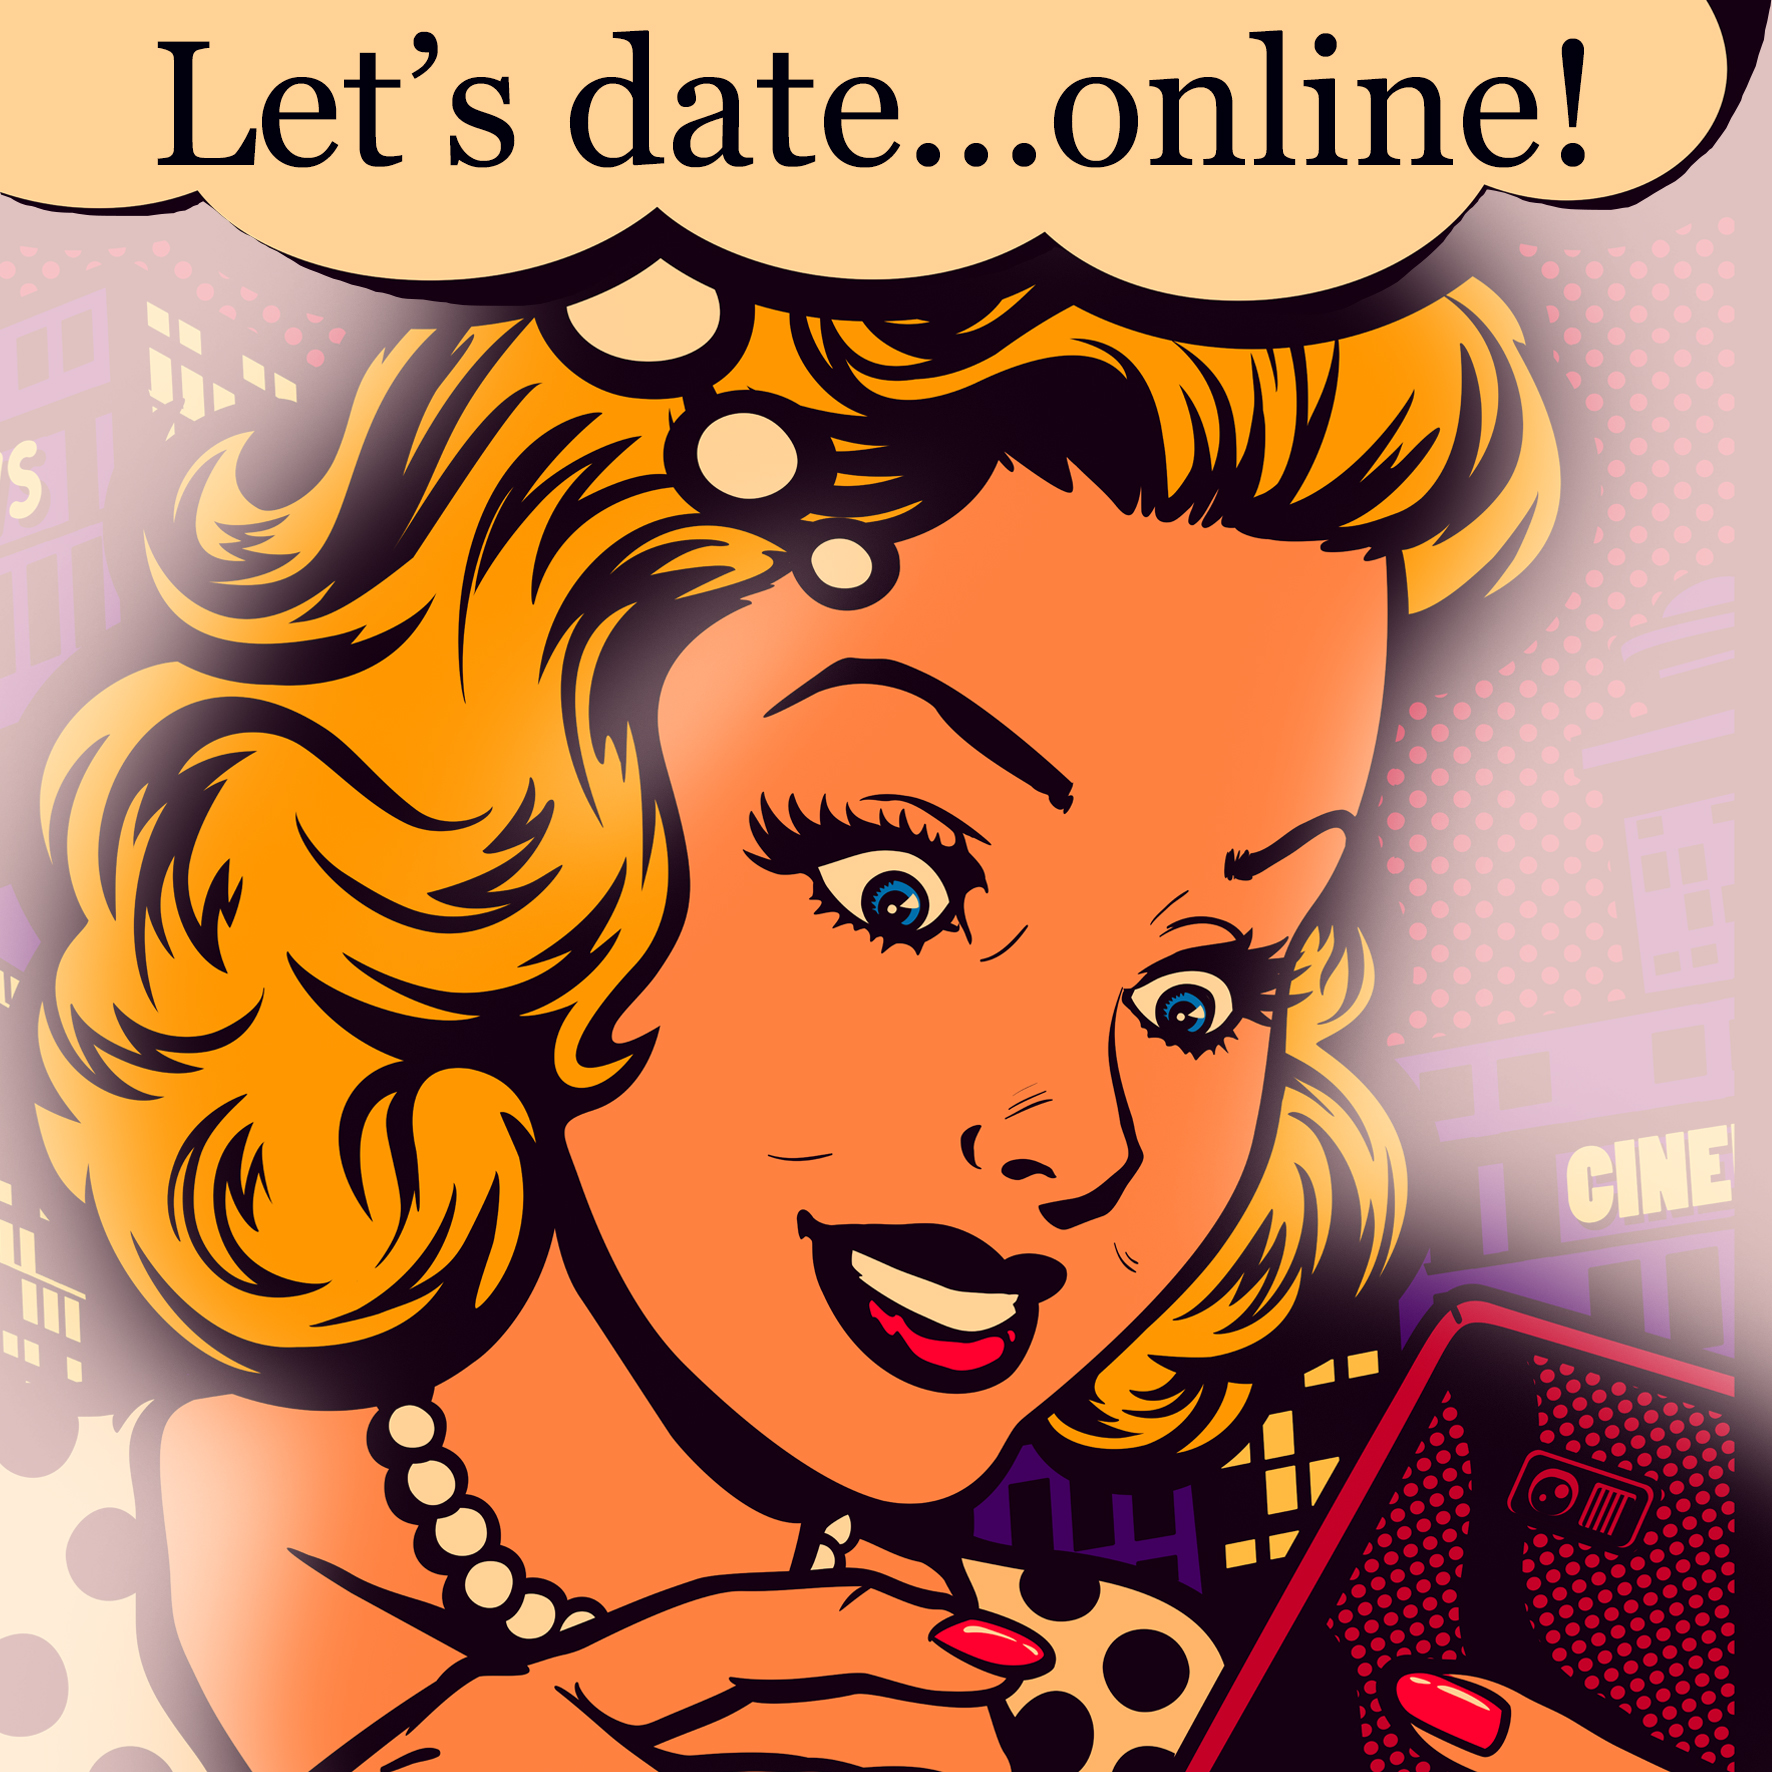 Online dating: Κάνει καλό στην ερωτική μας ζωή; Plus, τι πρέπει να προσέχεις!